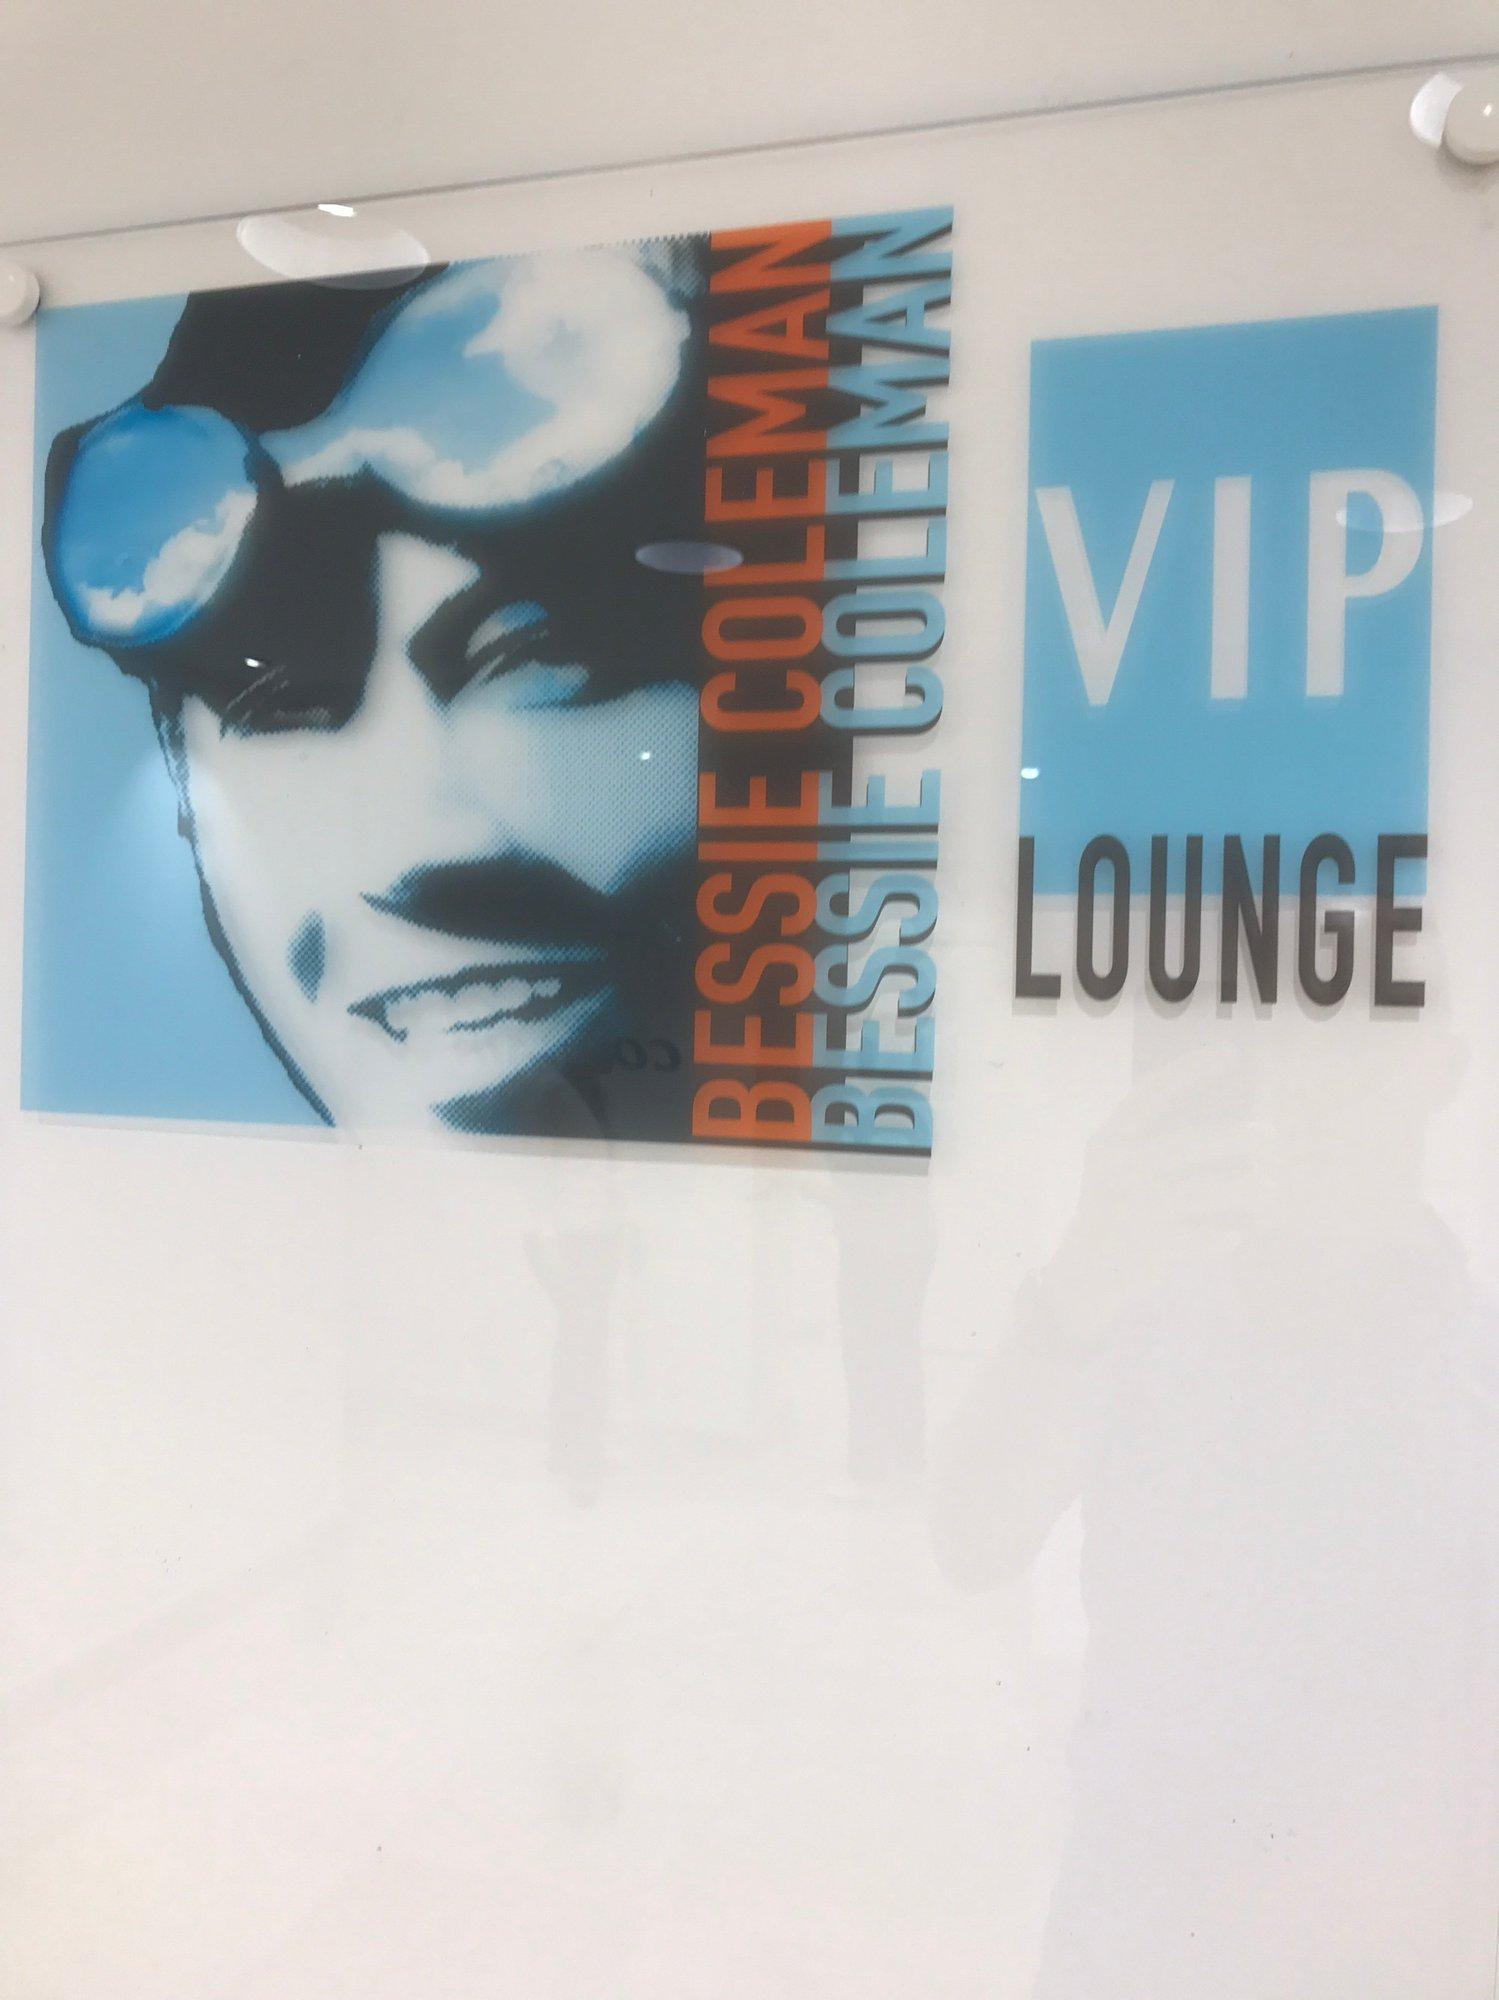 Bessie Coleman VIP Lounge image 5 of 7